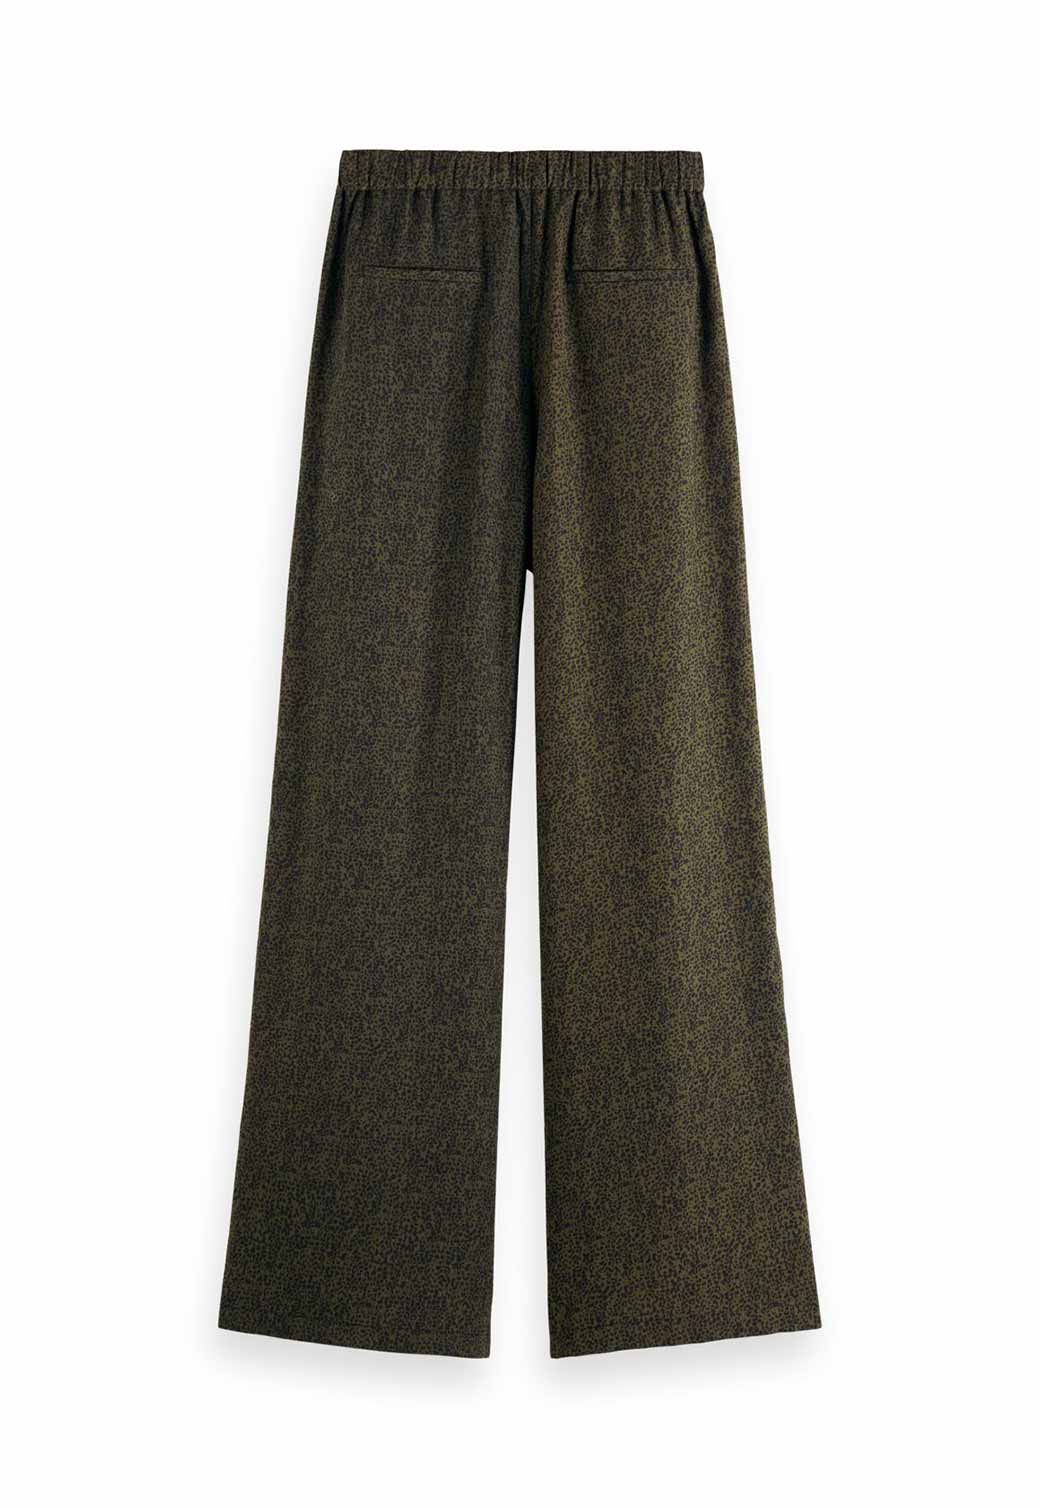 Dark Slate Gray מכנסיים ארוכים לנשים Eleni SCOTCH & SODA